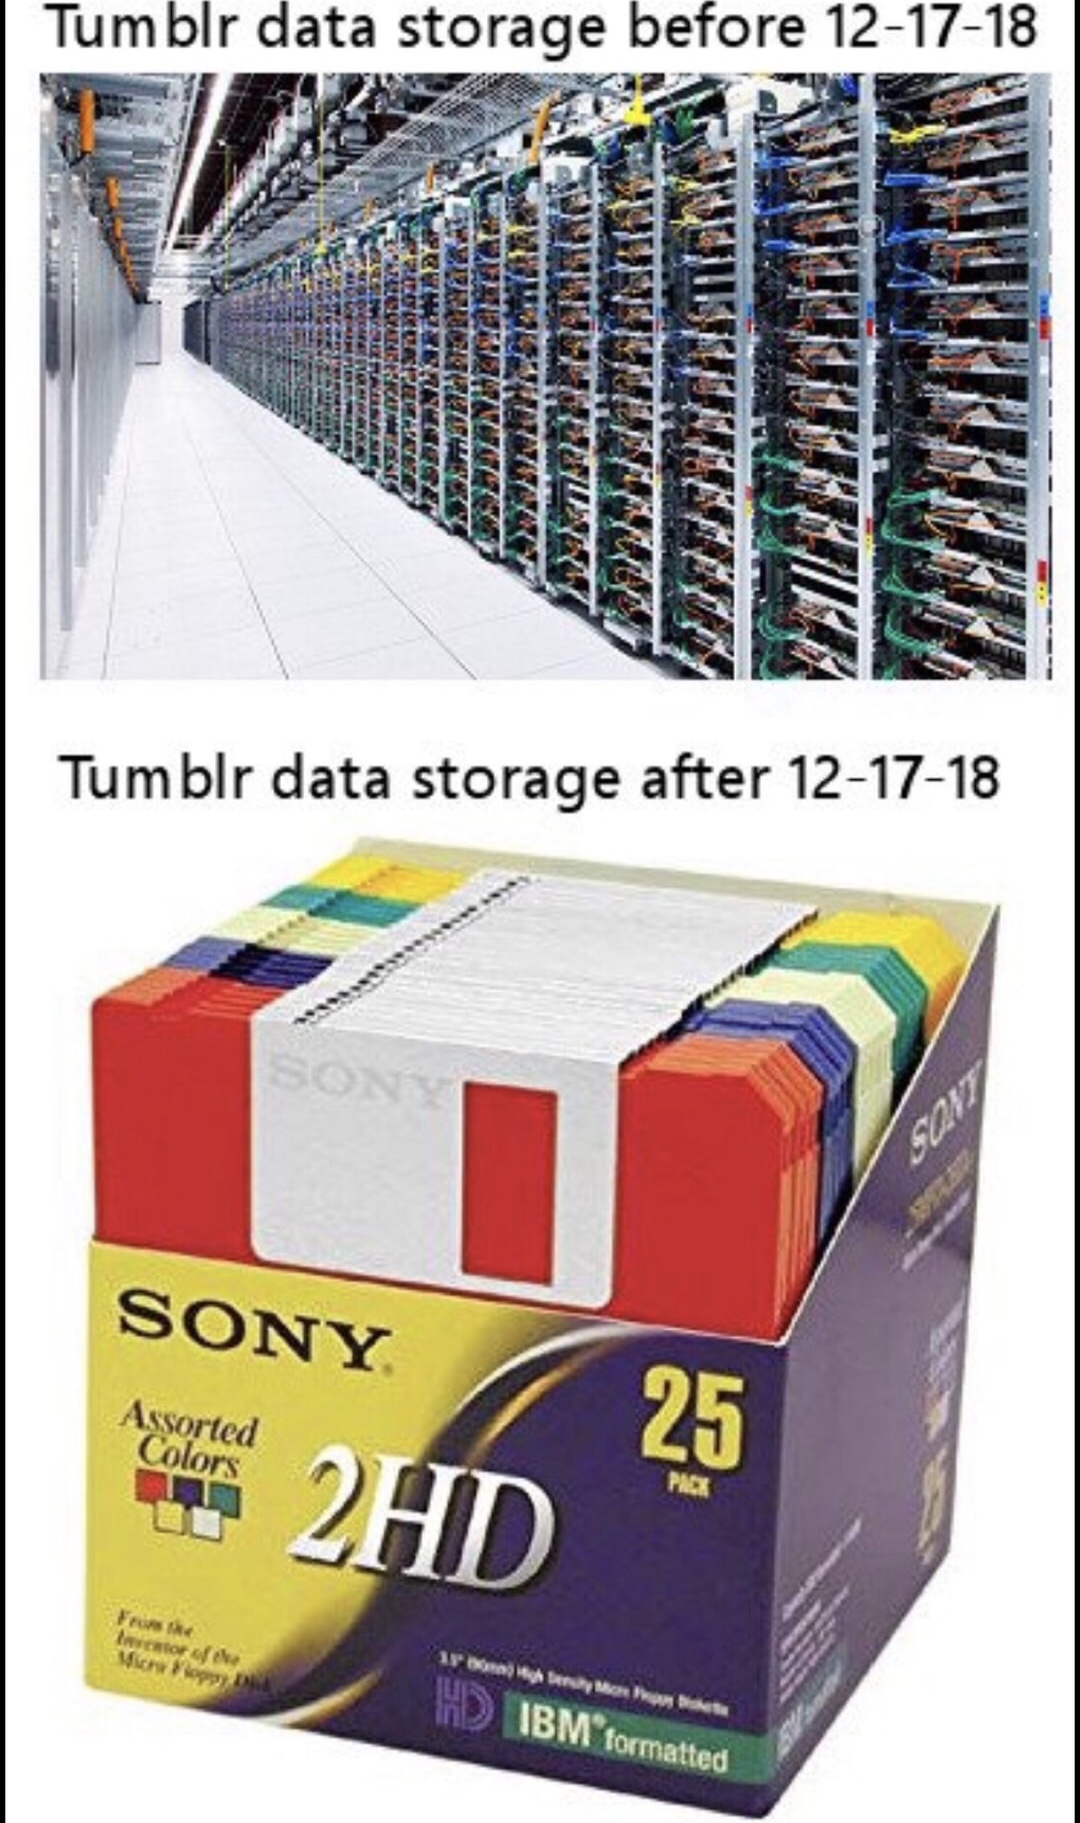 memes-  ark data centre - Tumblr data storage before 121718 Orange 59 Thtrial Trabretter Tumblr data storage after 121718 Sony S2 Hd 1BM" formatted